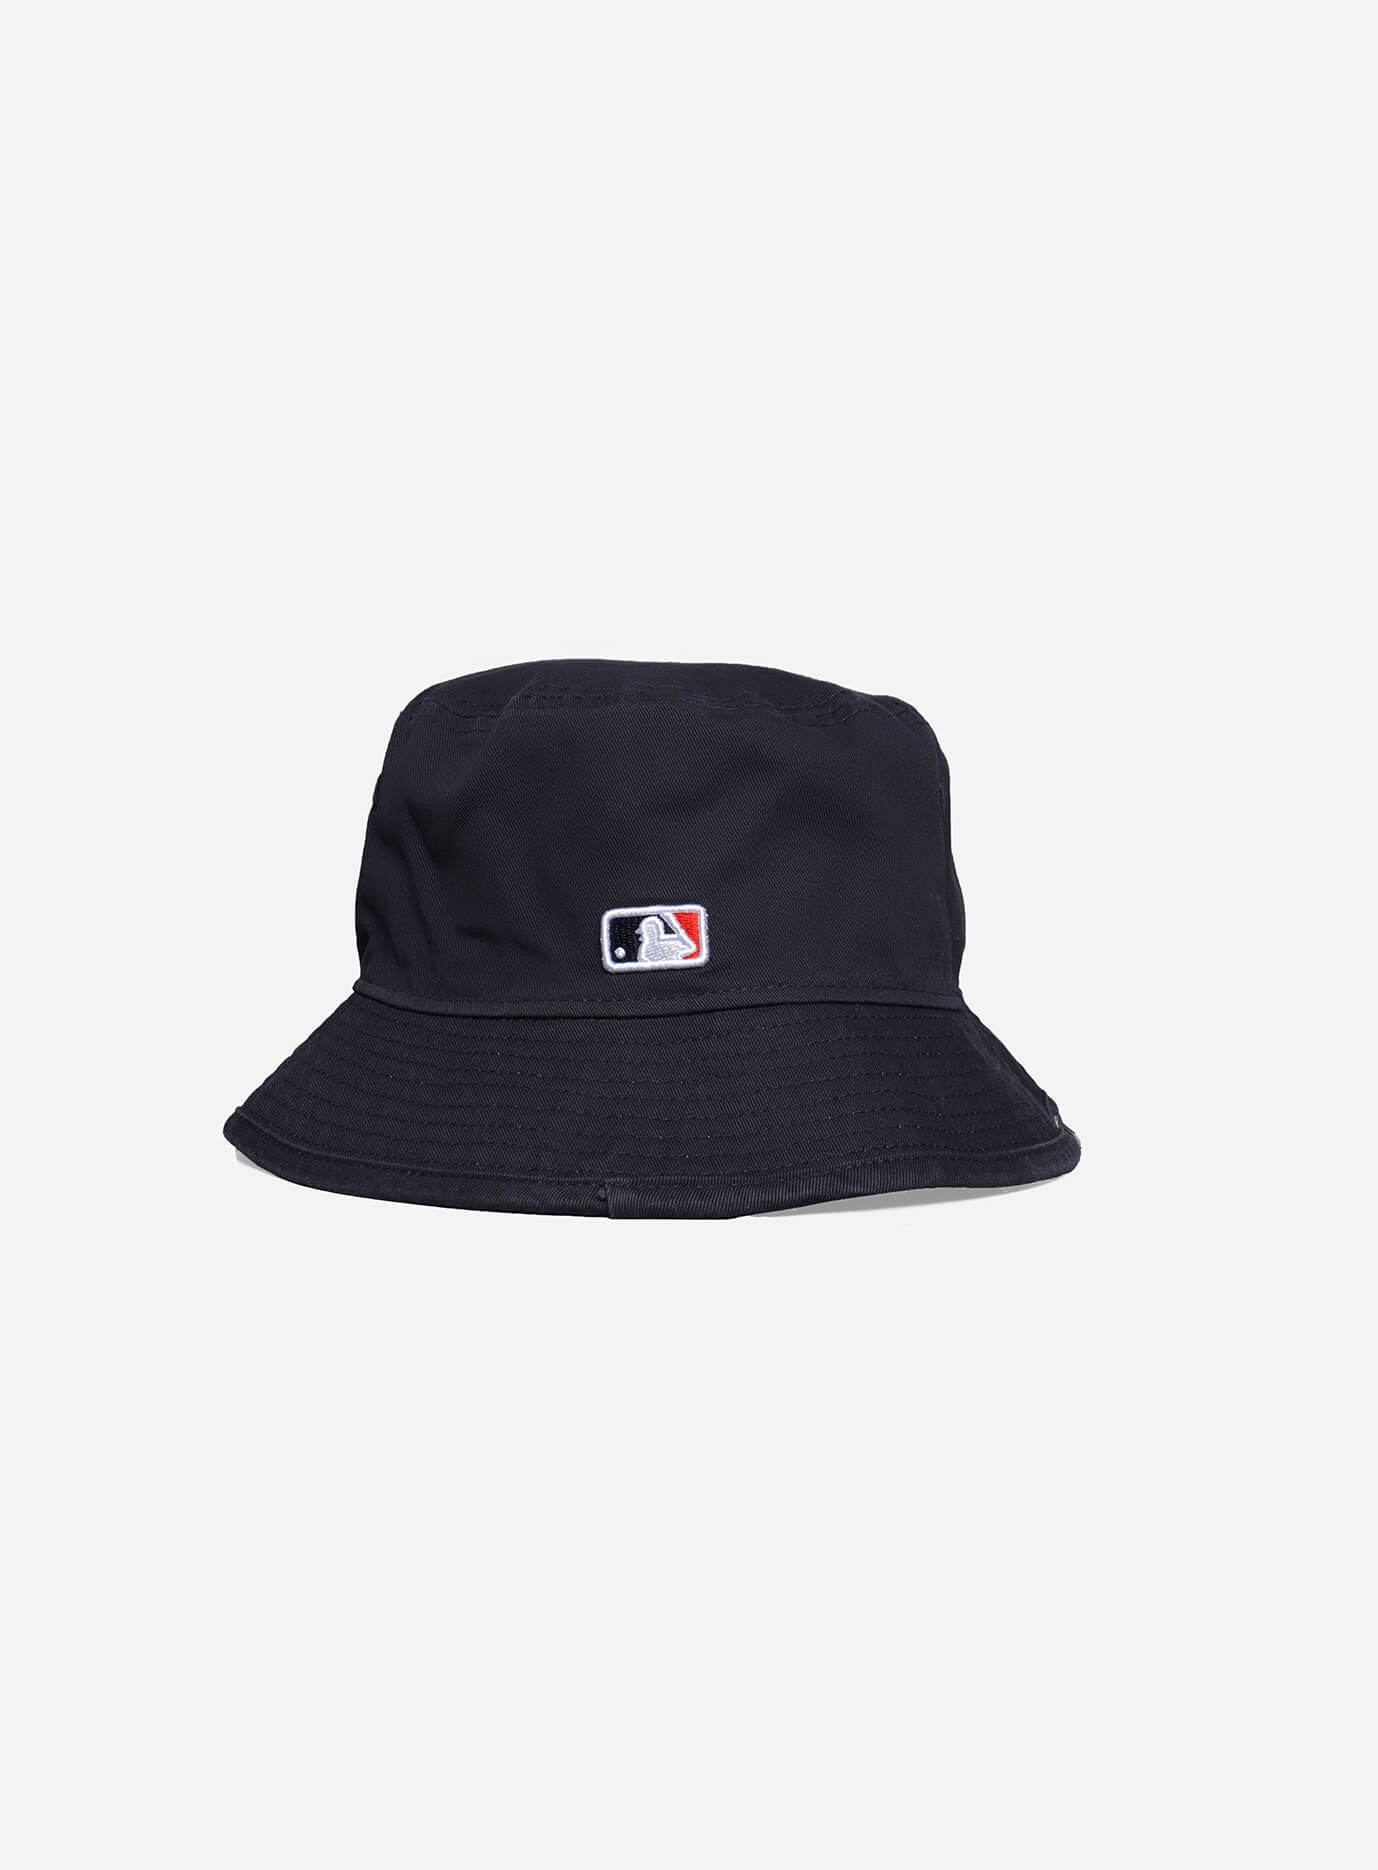 New York Yankees Bucket Hat - Navy